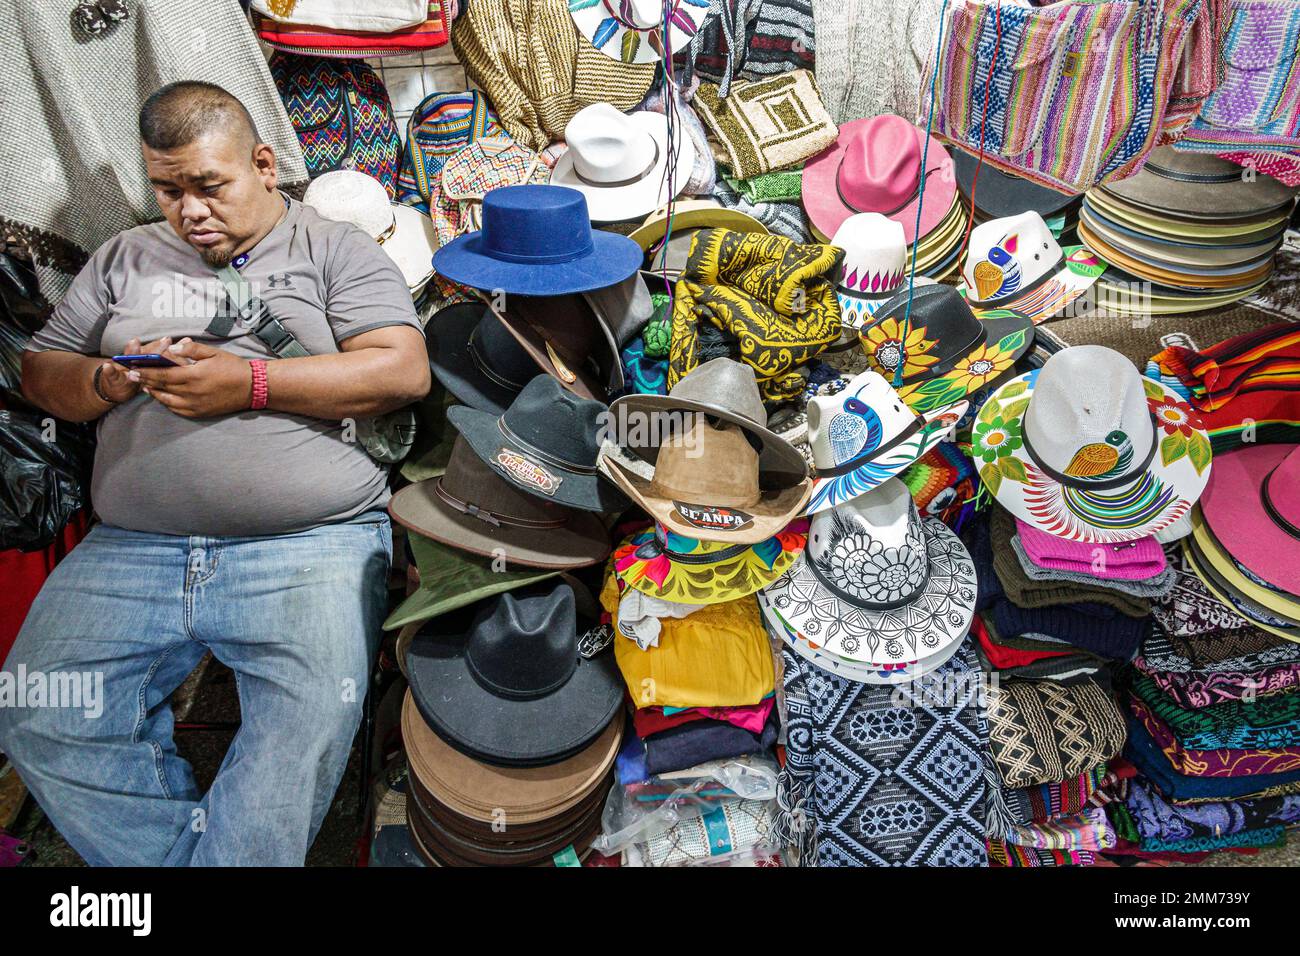 Mexico City,Avenida Paseo de la Reforma,Christmas holiday artisanal market mercado artesanal,hats,man men male,adult adults,resident residents,display Stock Photo